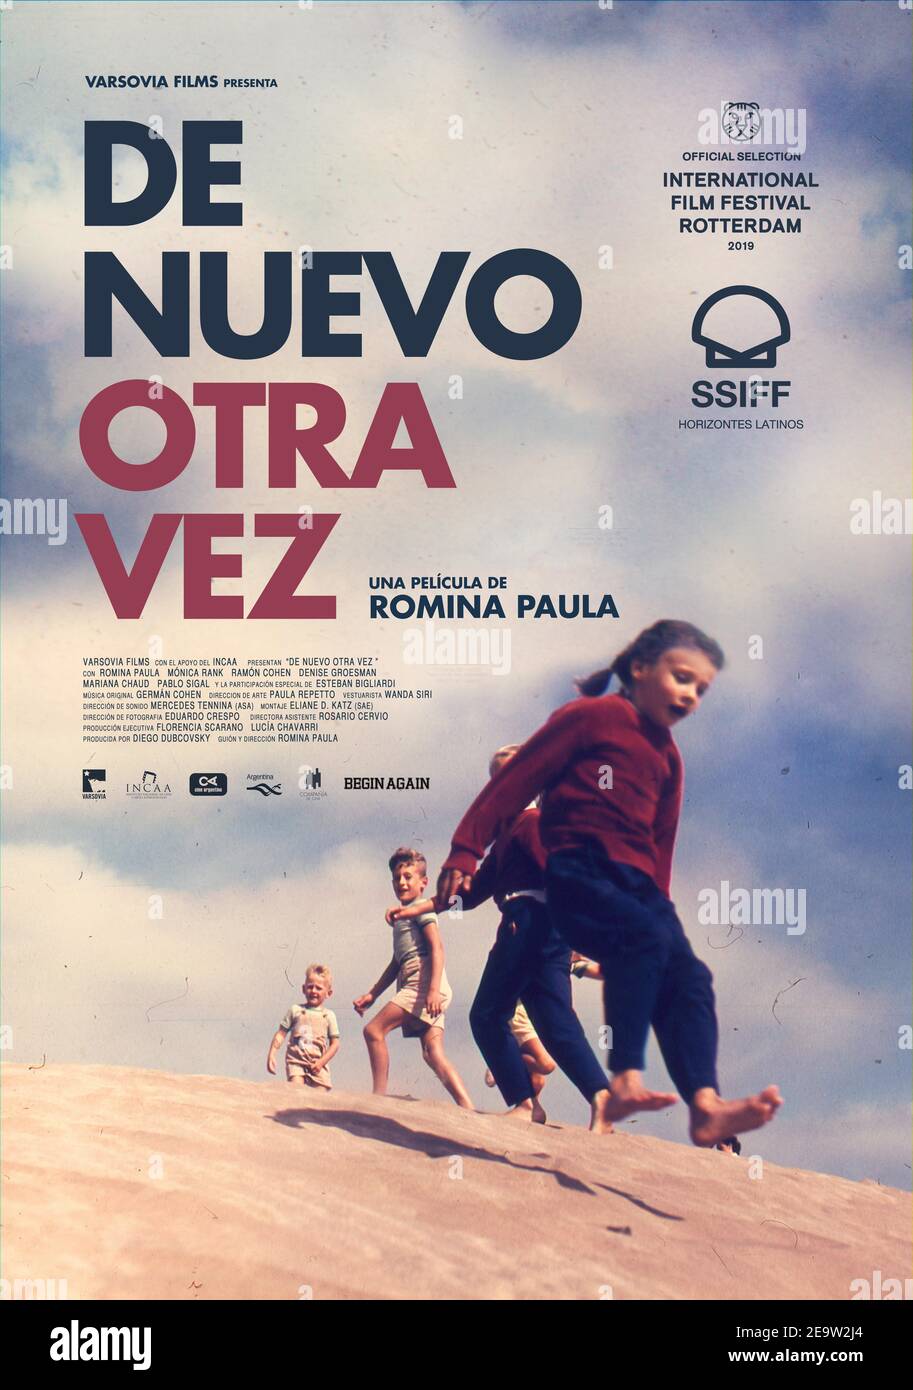 DE NUEVO OTRA VEZ (2019), directed by ROMINA PAULA. Credit: VARSOVIA FILMS  / Album Stock Photo - Alamy